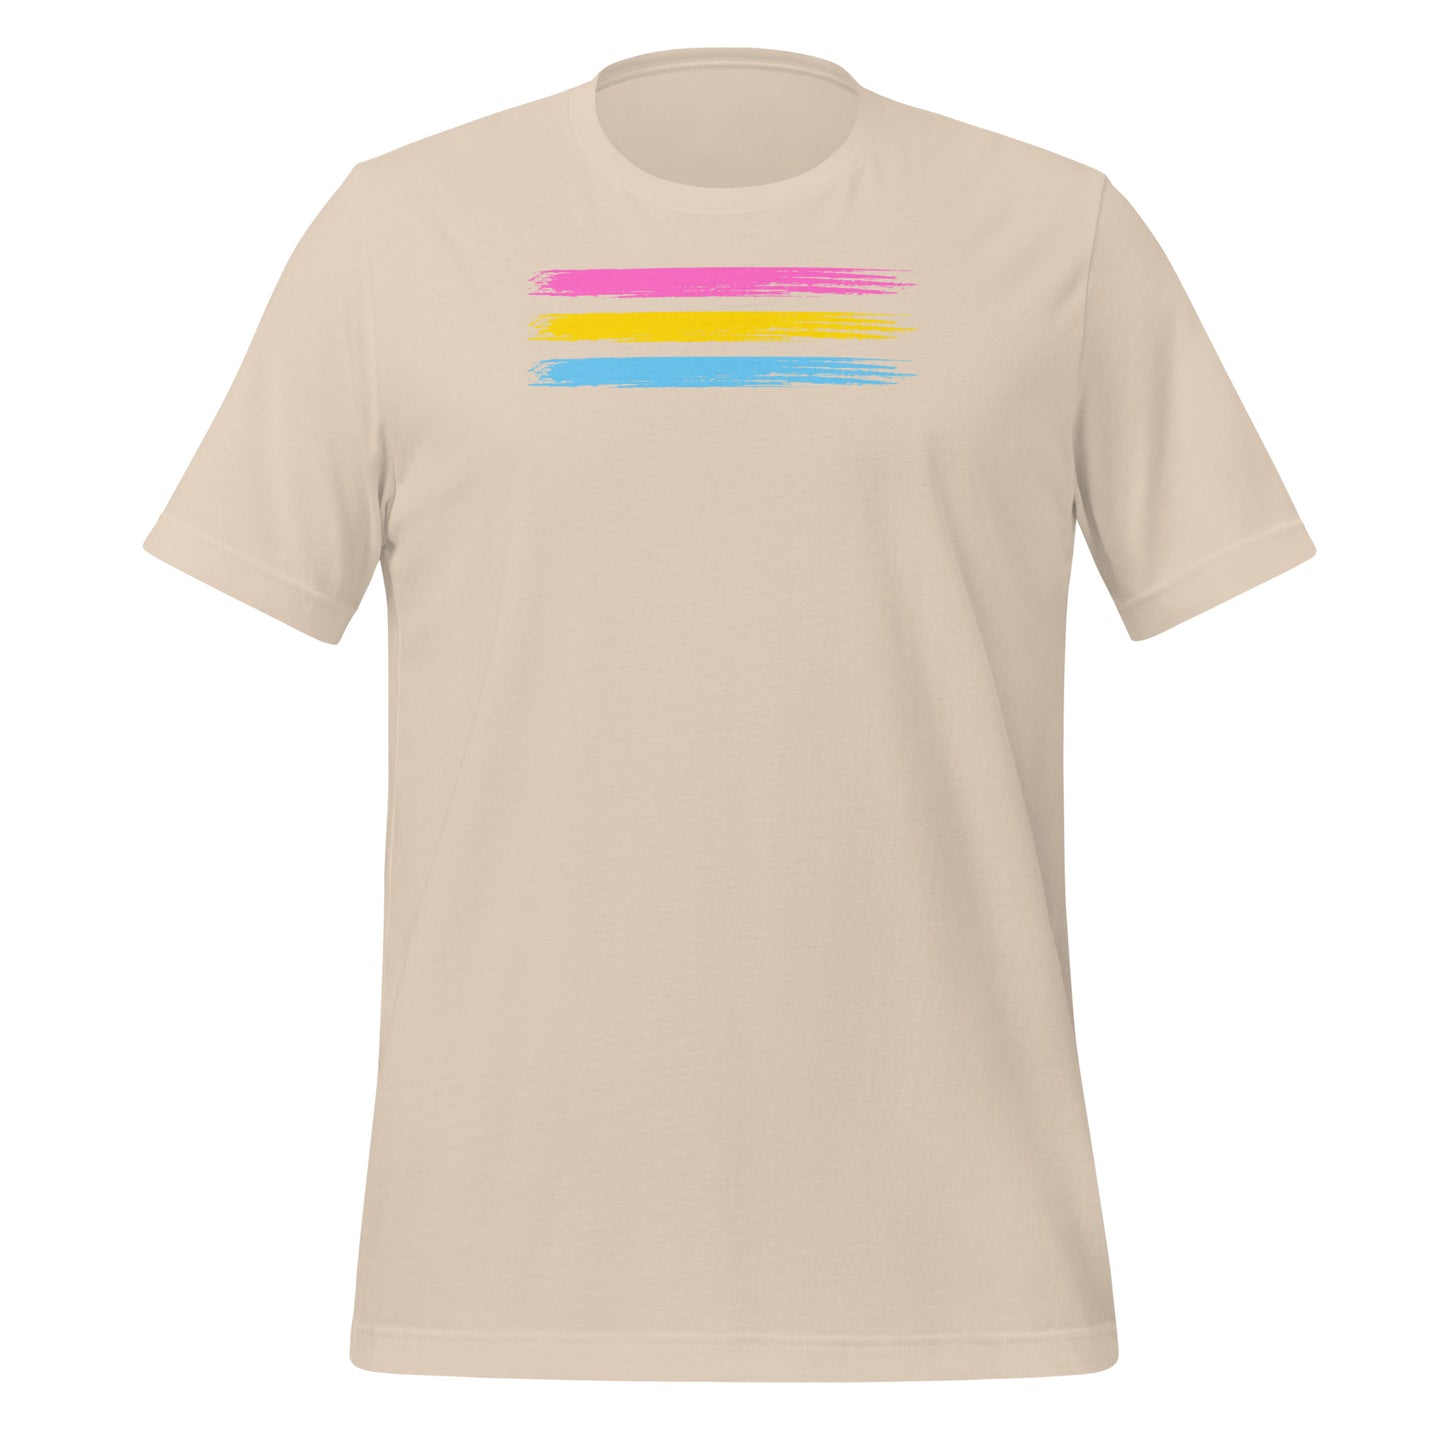 Pansexual Pride Flag unisex t-shirt